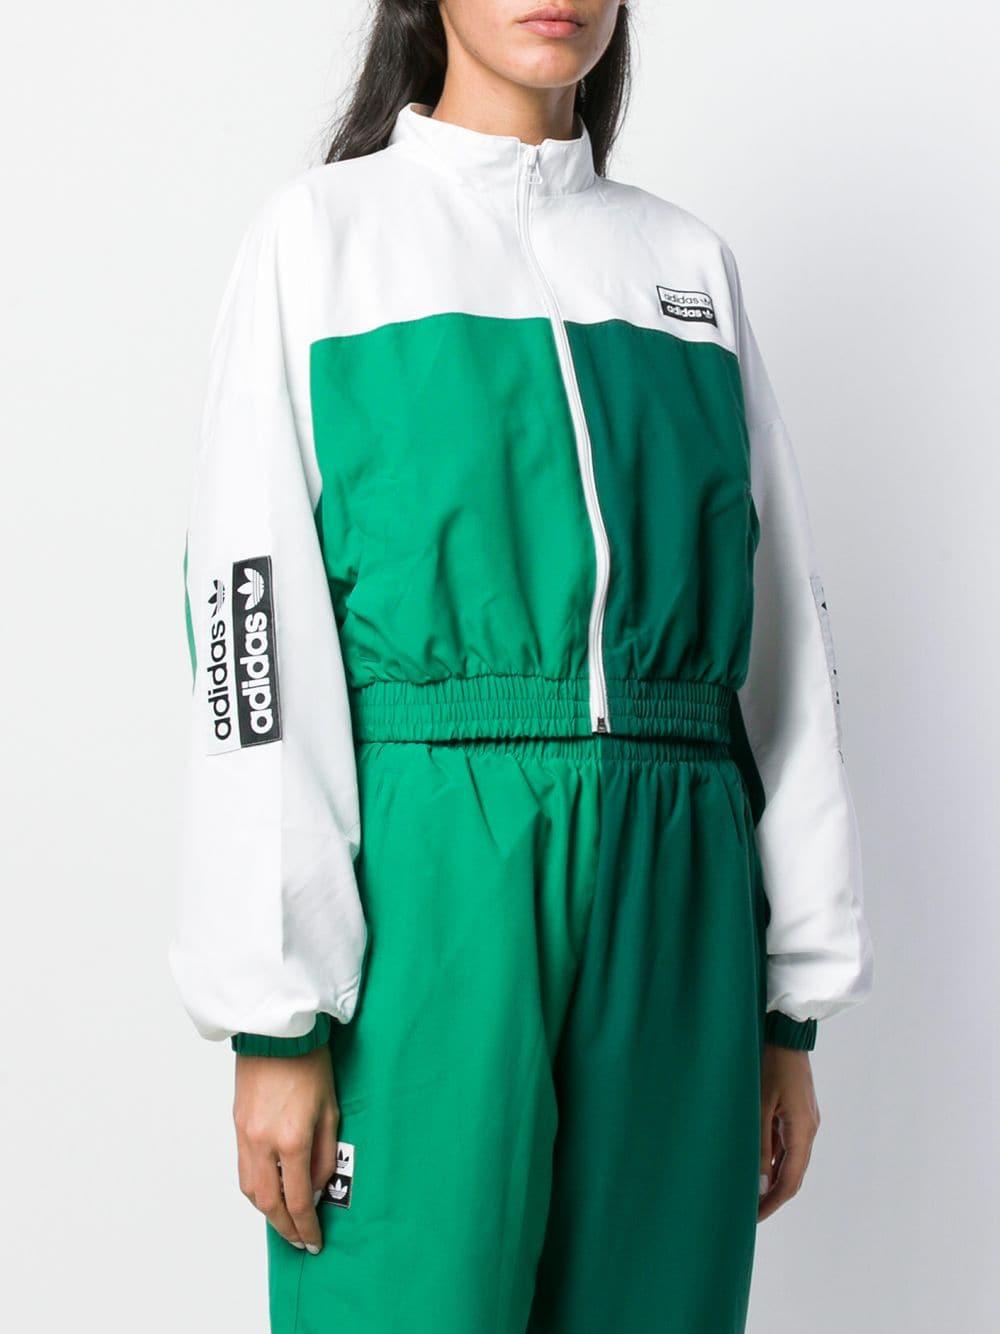 Buy > womens green adidas jacket > in stock